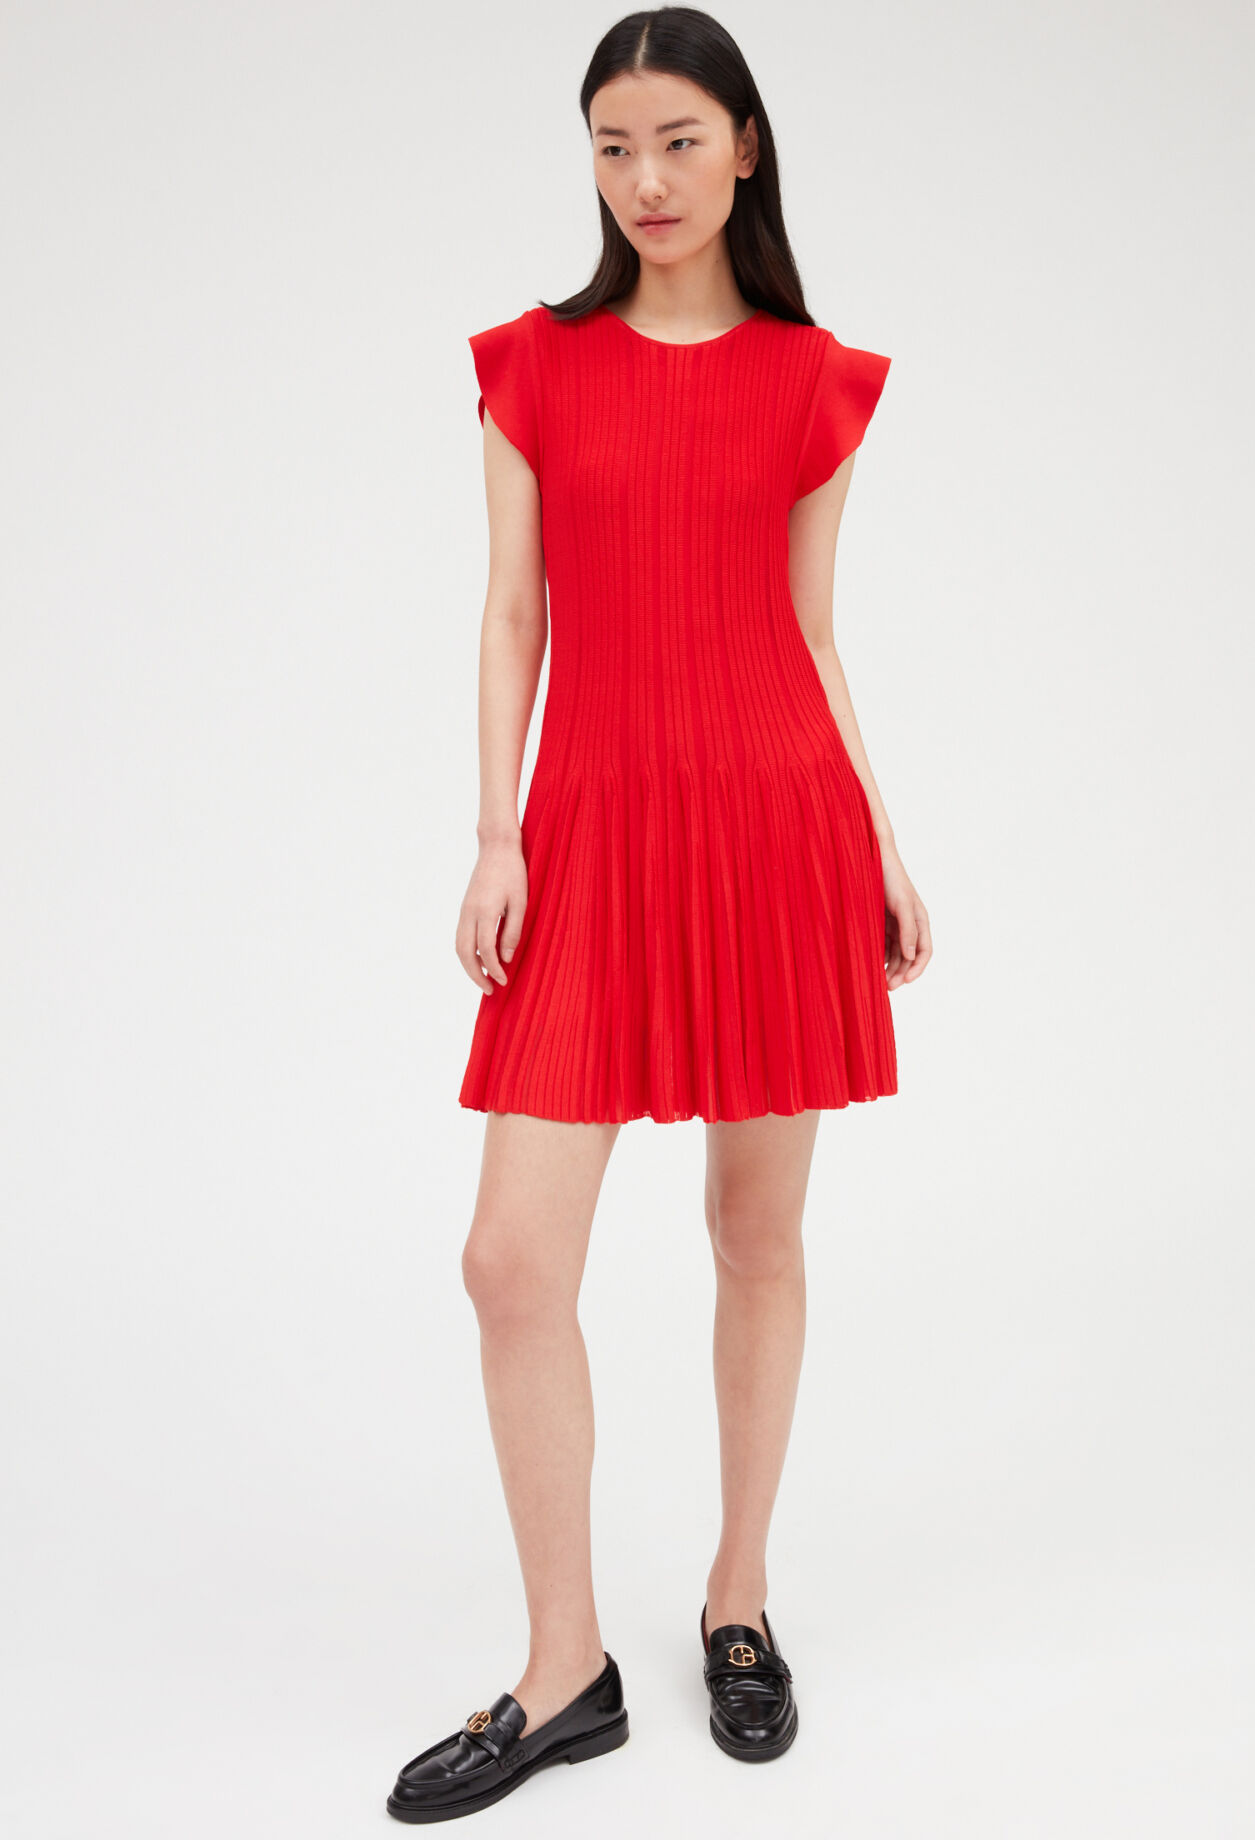 Red knit short dress